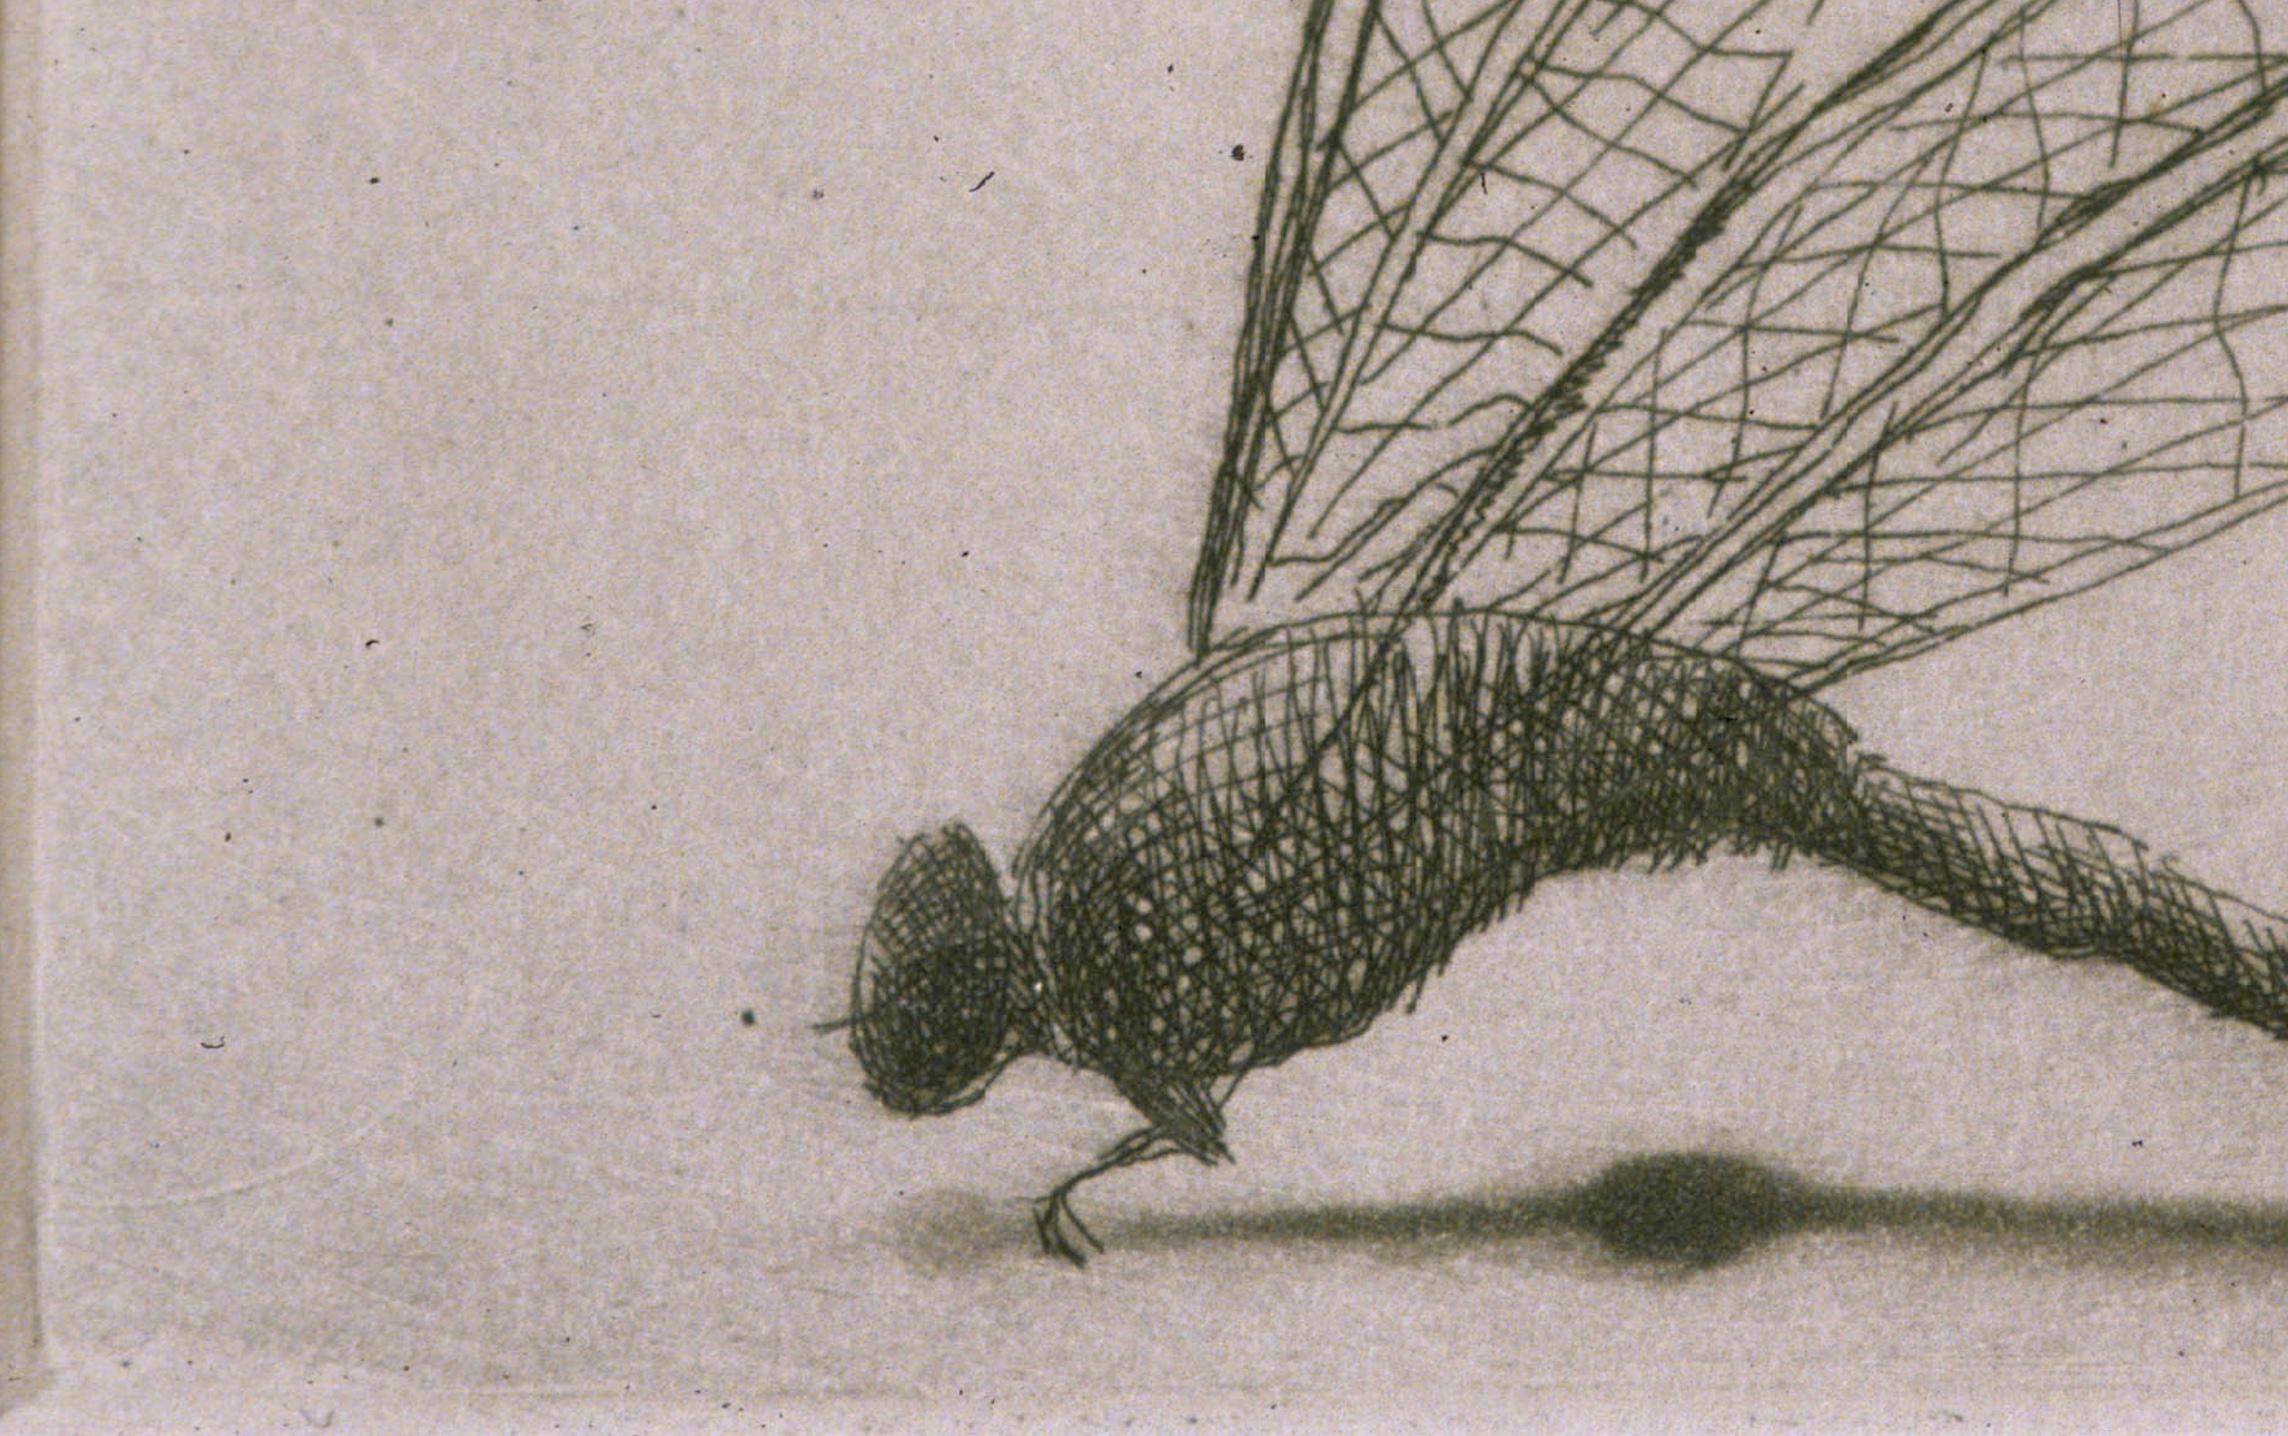 Dragonfly : Monochrome etching - Print by Lisa Dinhofer